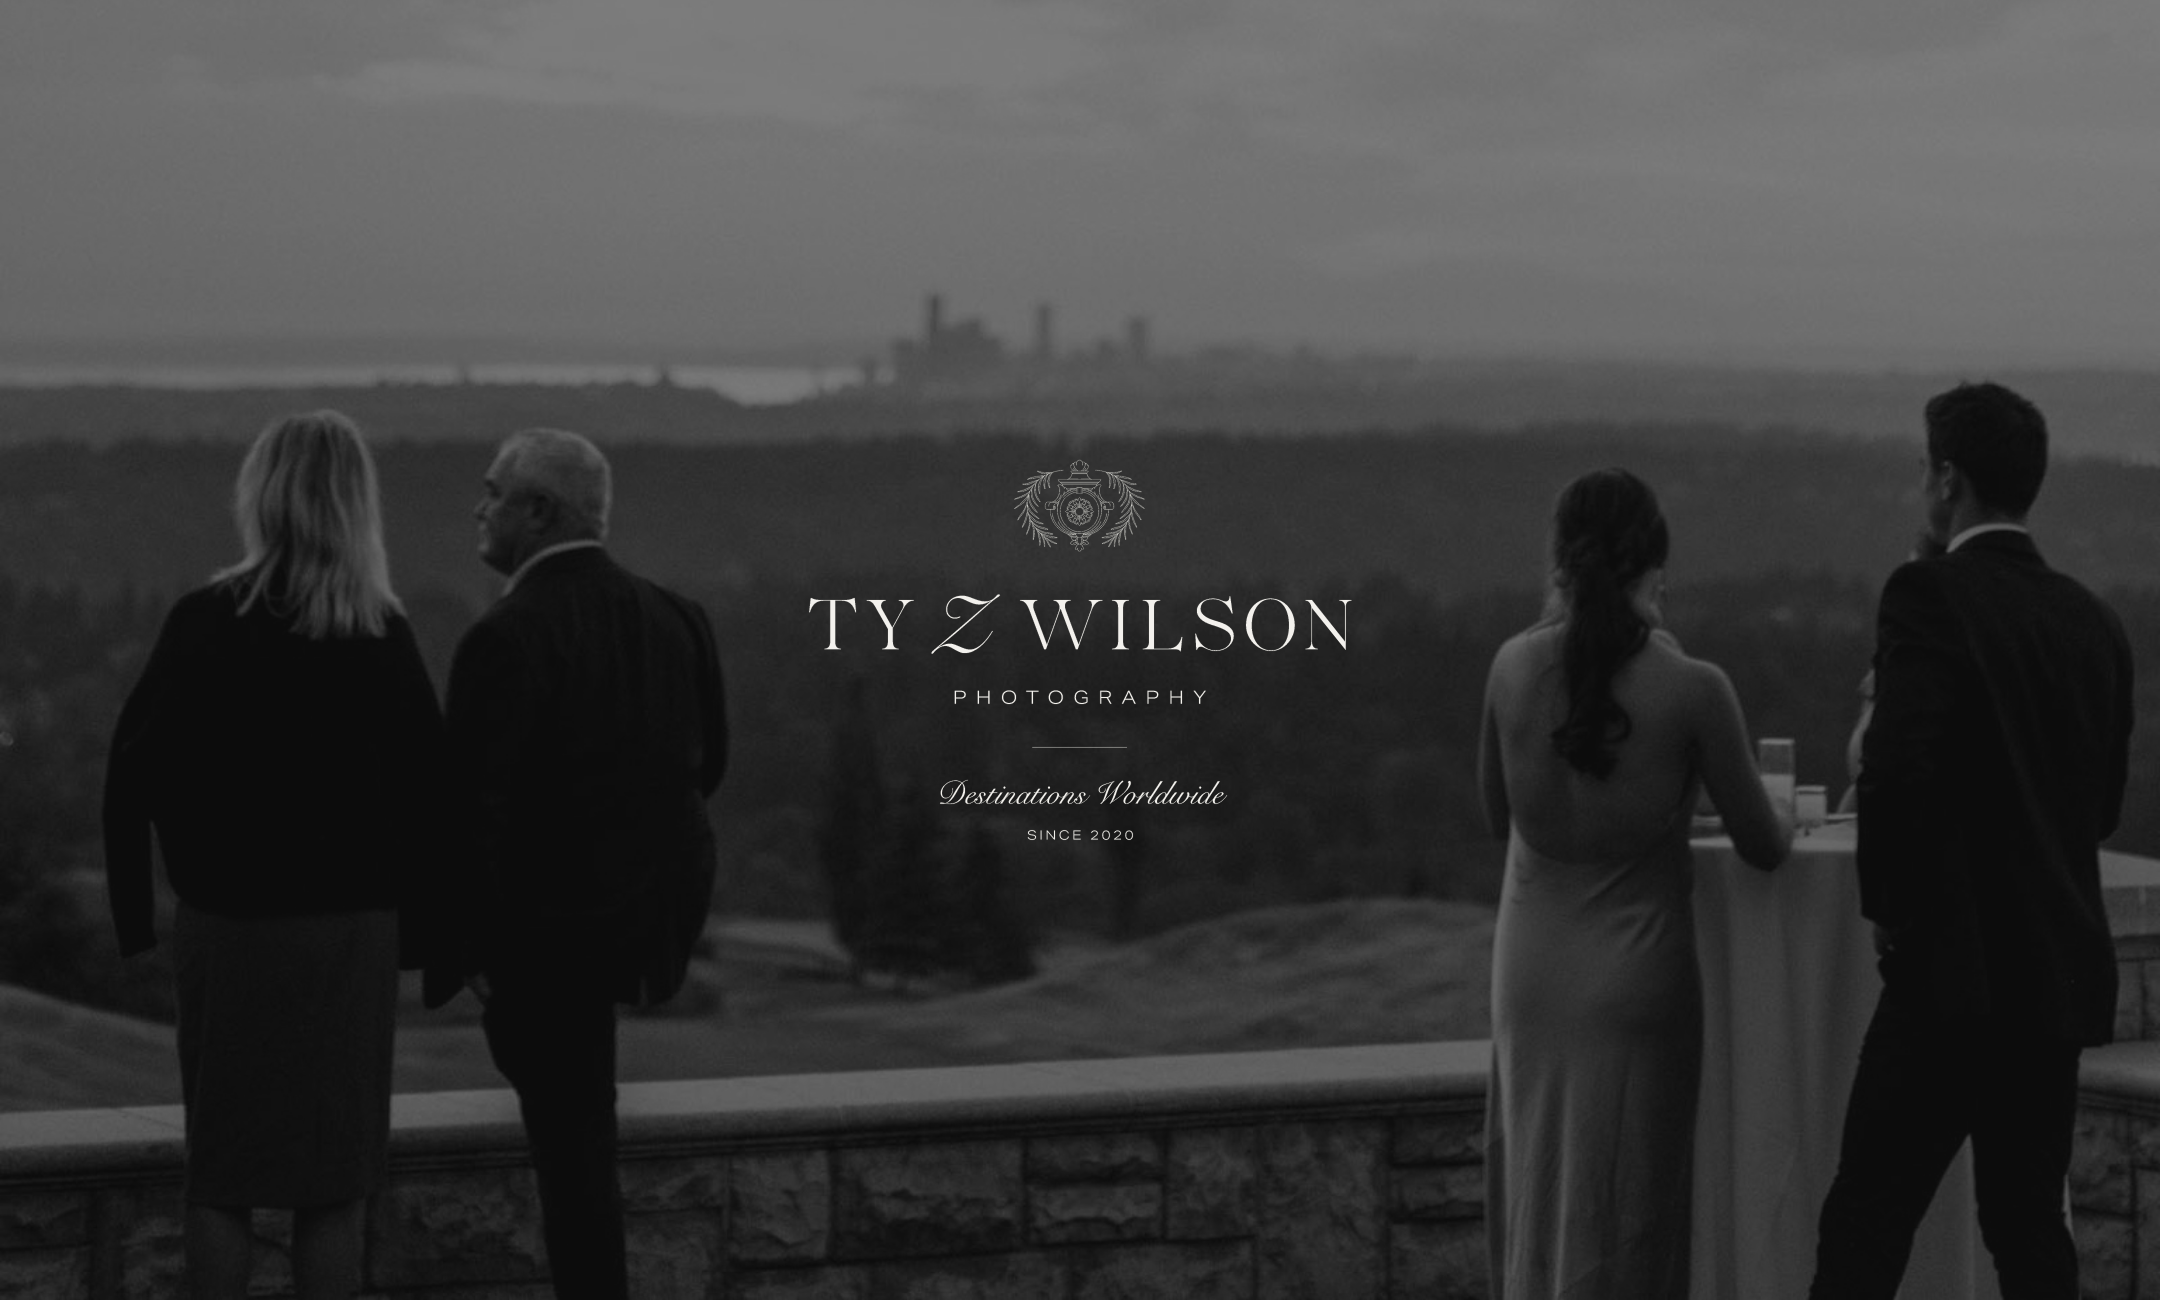 Ty Z Wilson - Wedding Photographer Logo by Sarah Ann Design